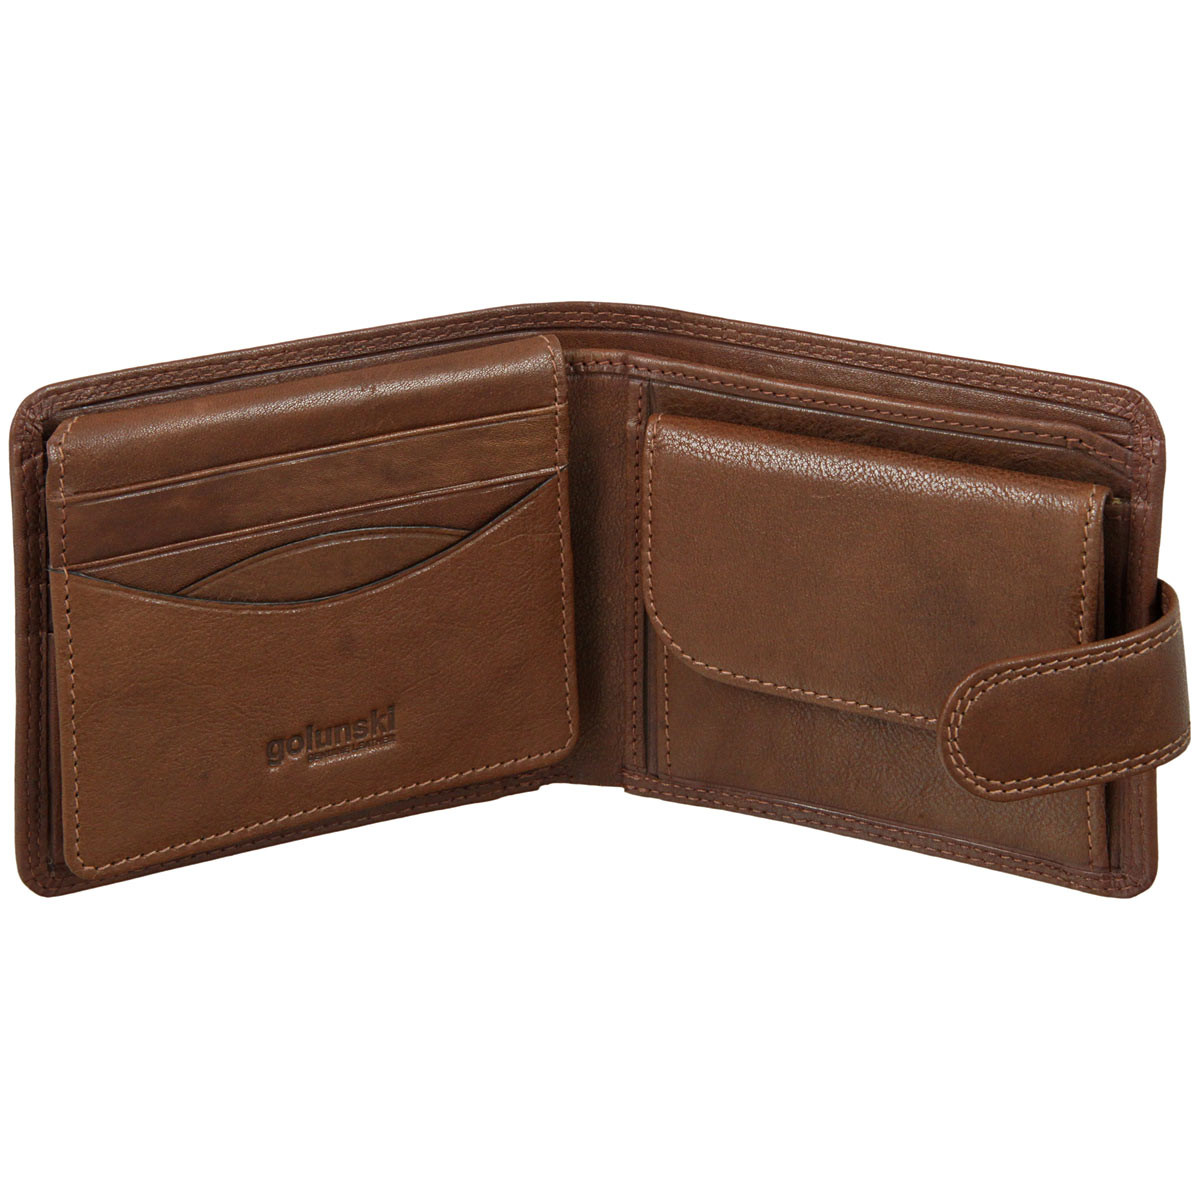 Golunski Oak Soft Leather Men's Wallet 7-704 Tan